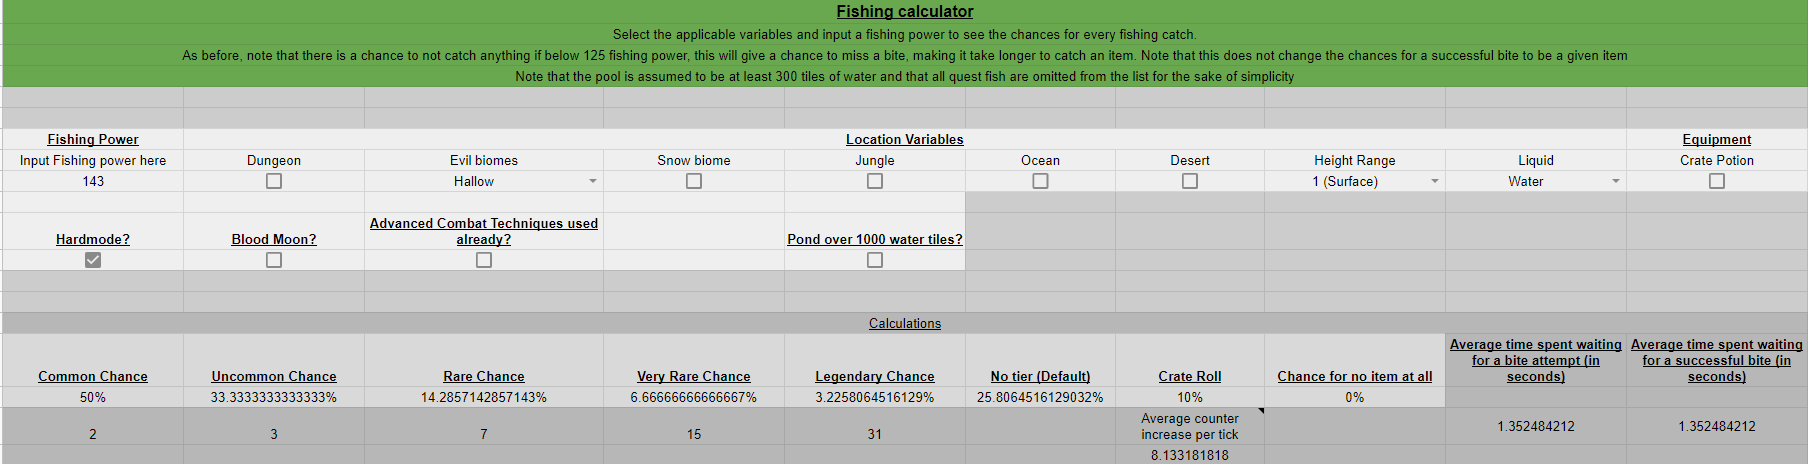 fishingcalcualtorsheet3.png